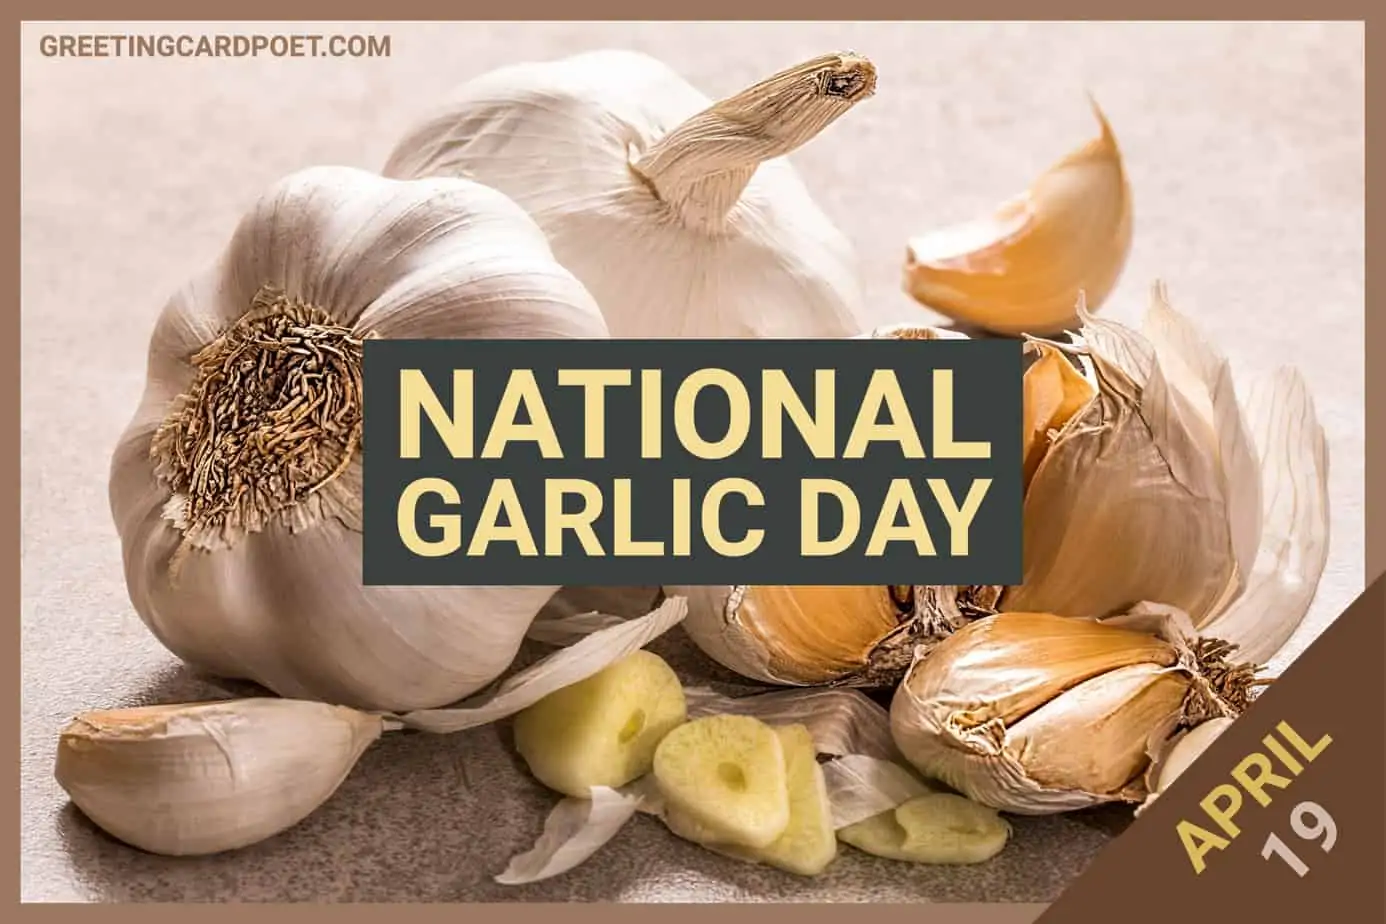 National Garlic Day - April 19